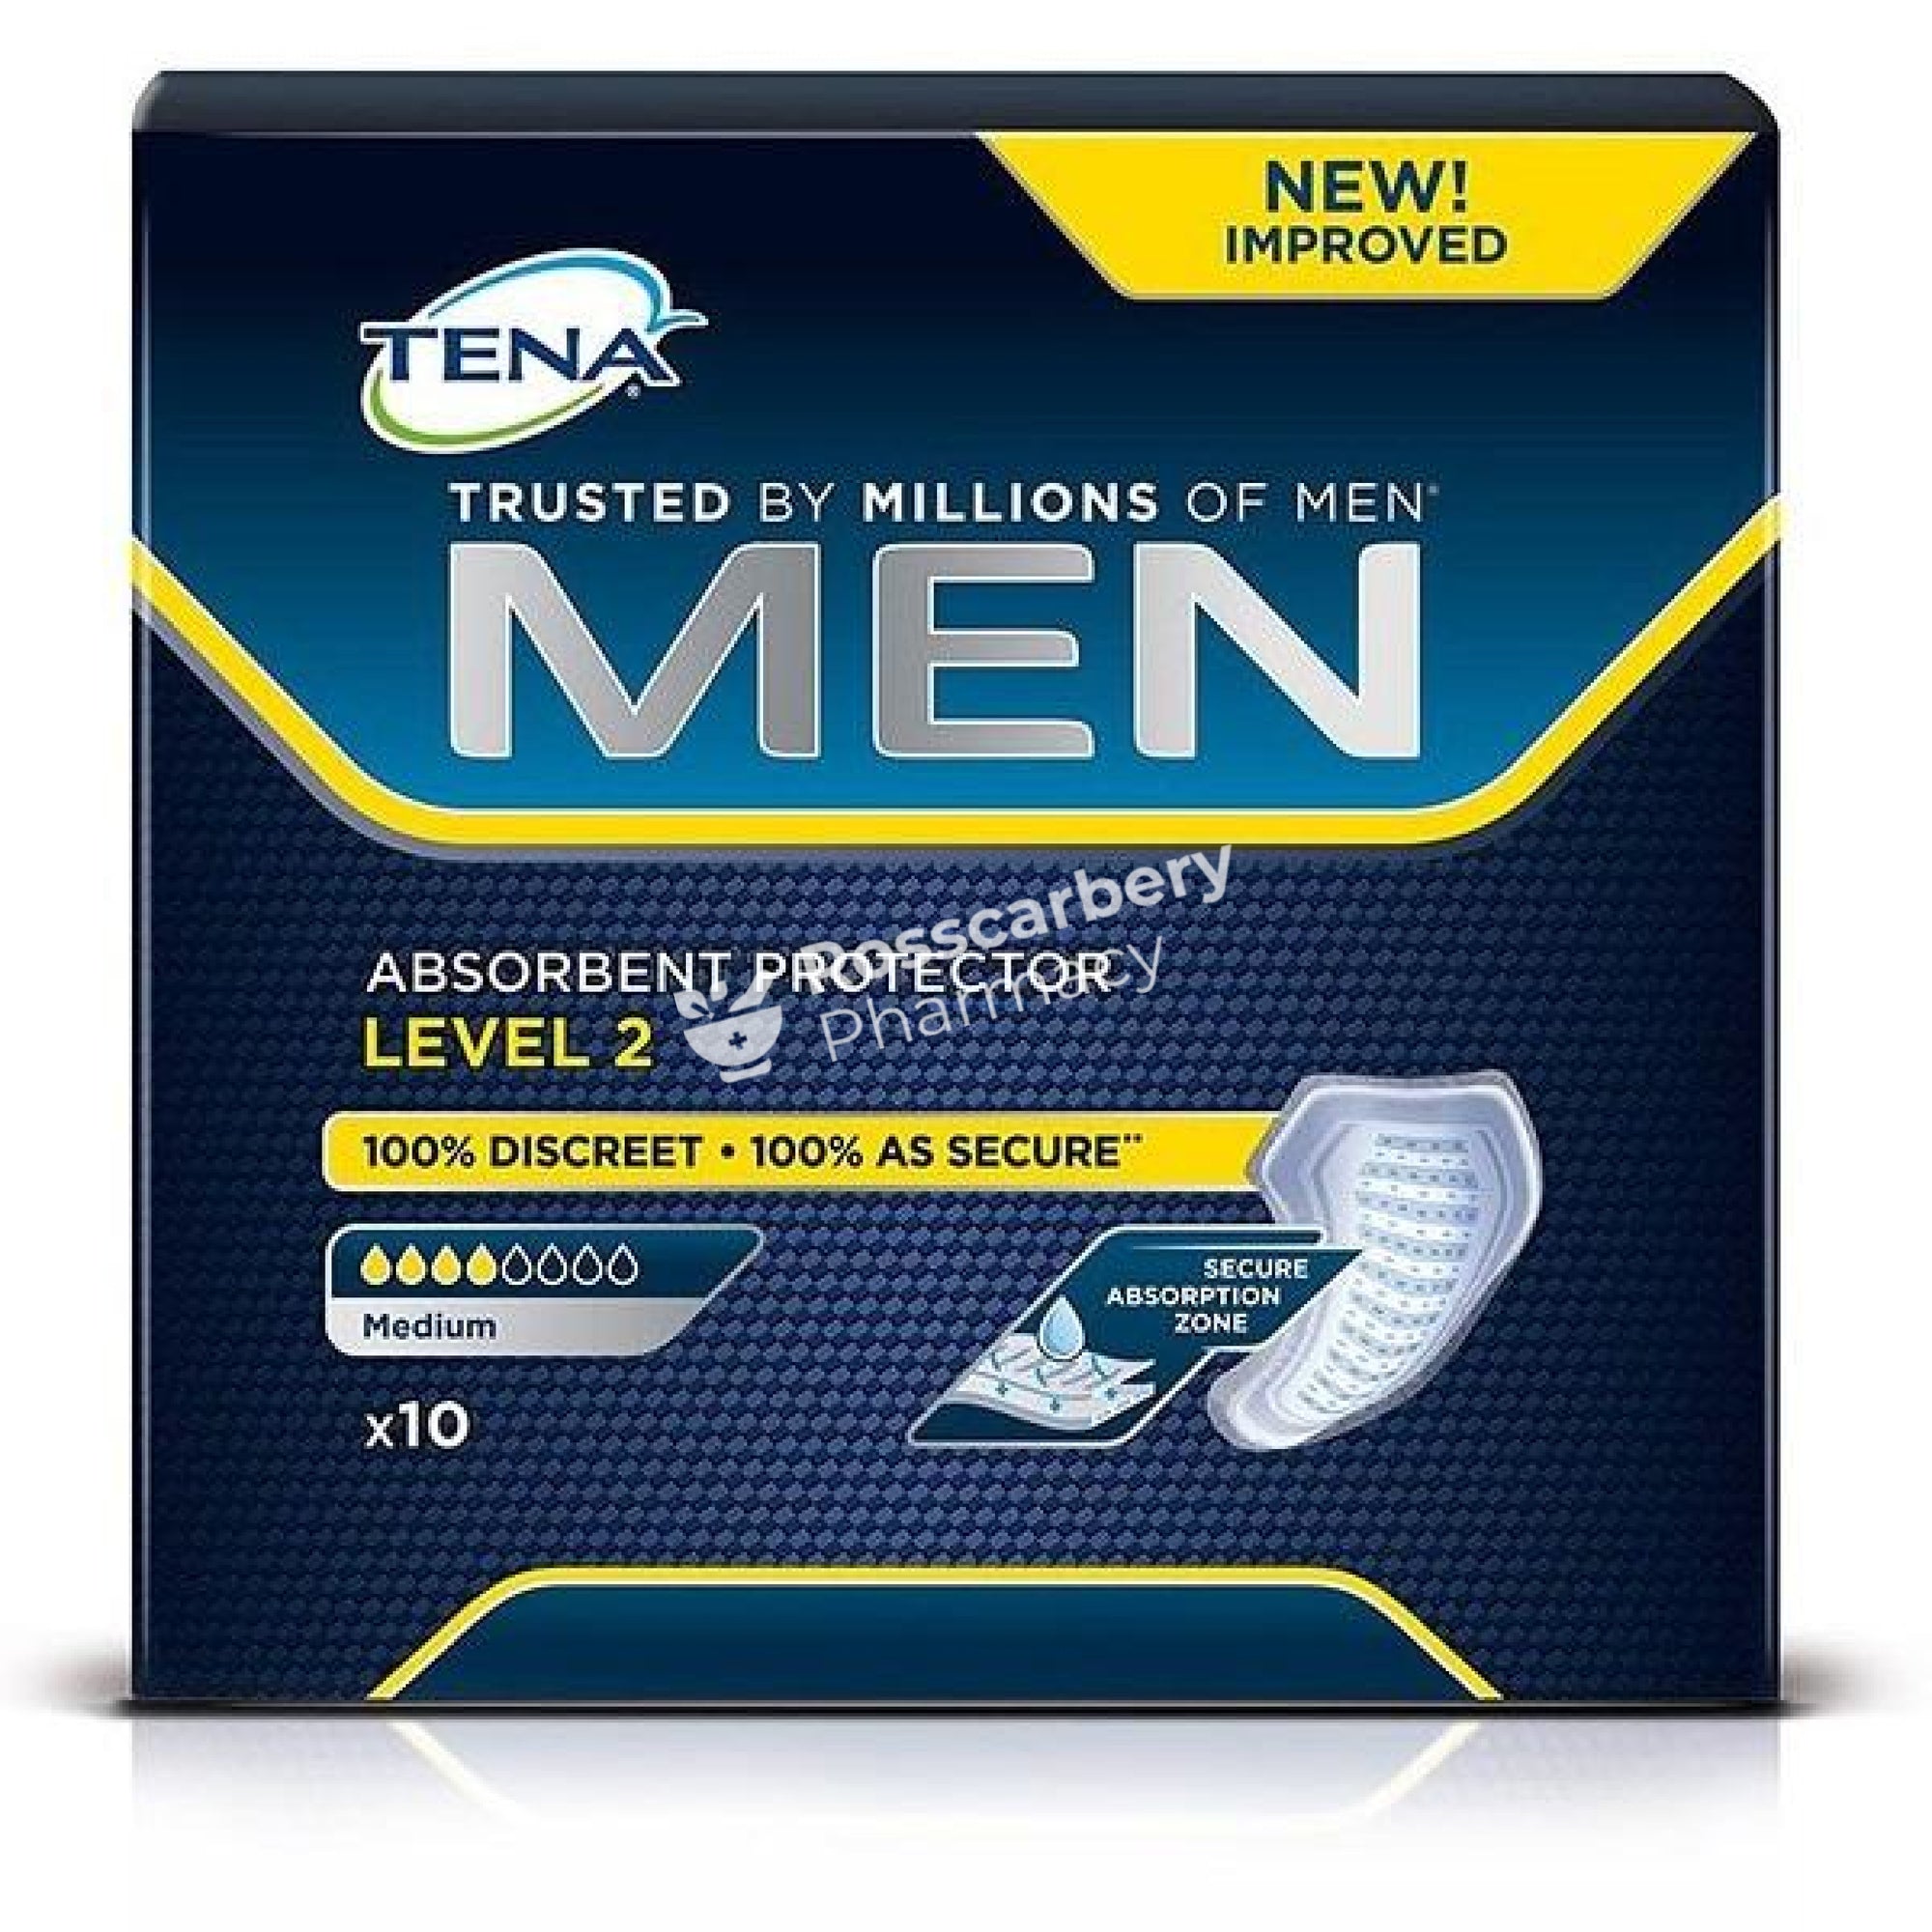 Tena Men Level 2 (Medium) Absorbent Protector Pads